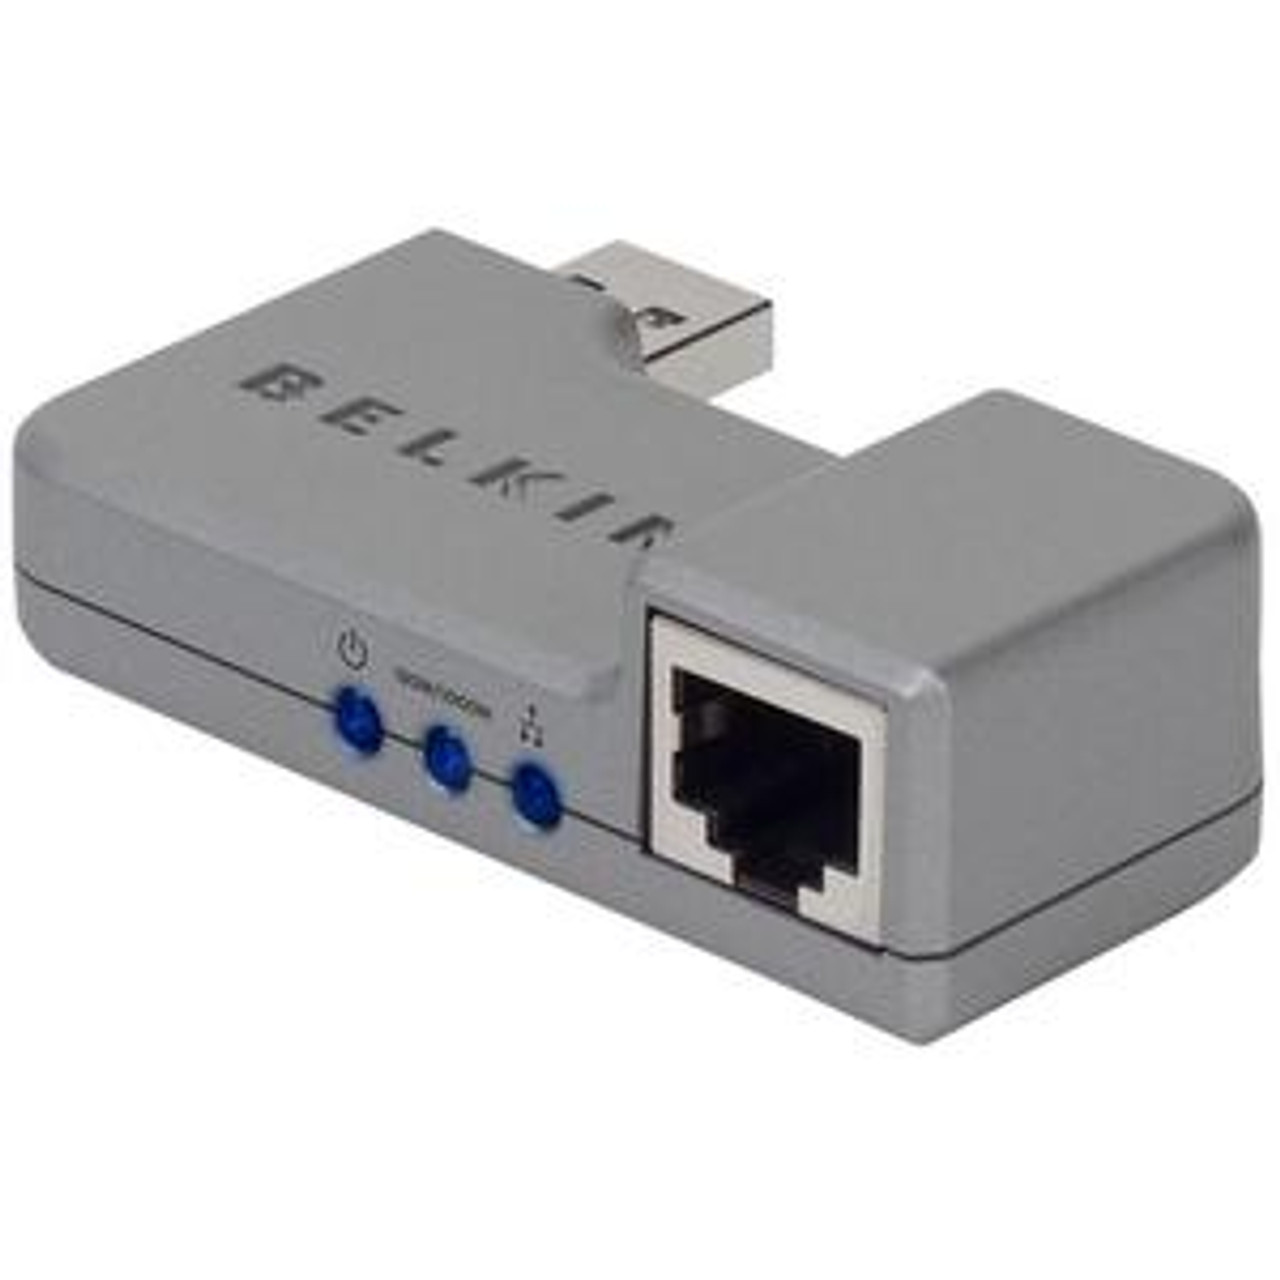 F5D5055 Belkin Gigabit USB 2.0 Network Adapter USB 1 x RJ-45 10/100/1000Base-T